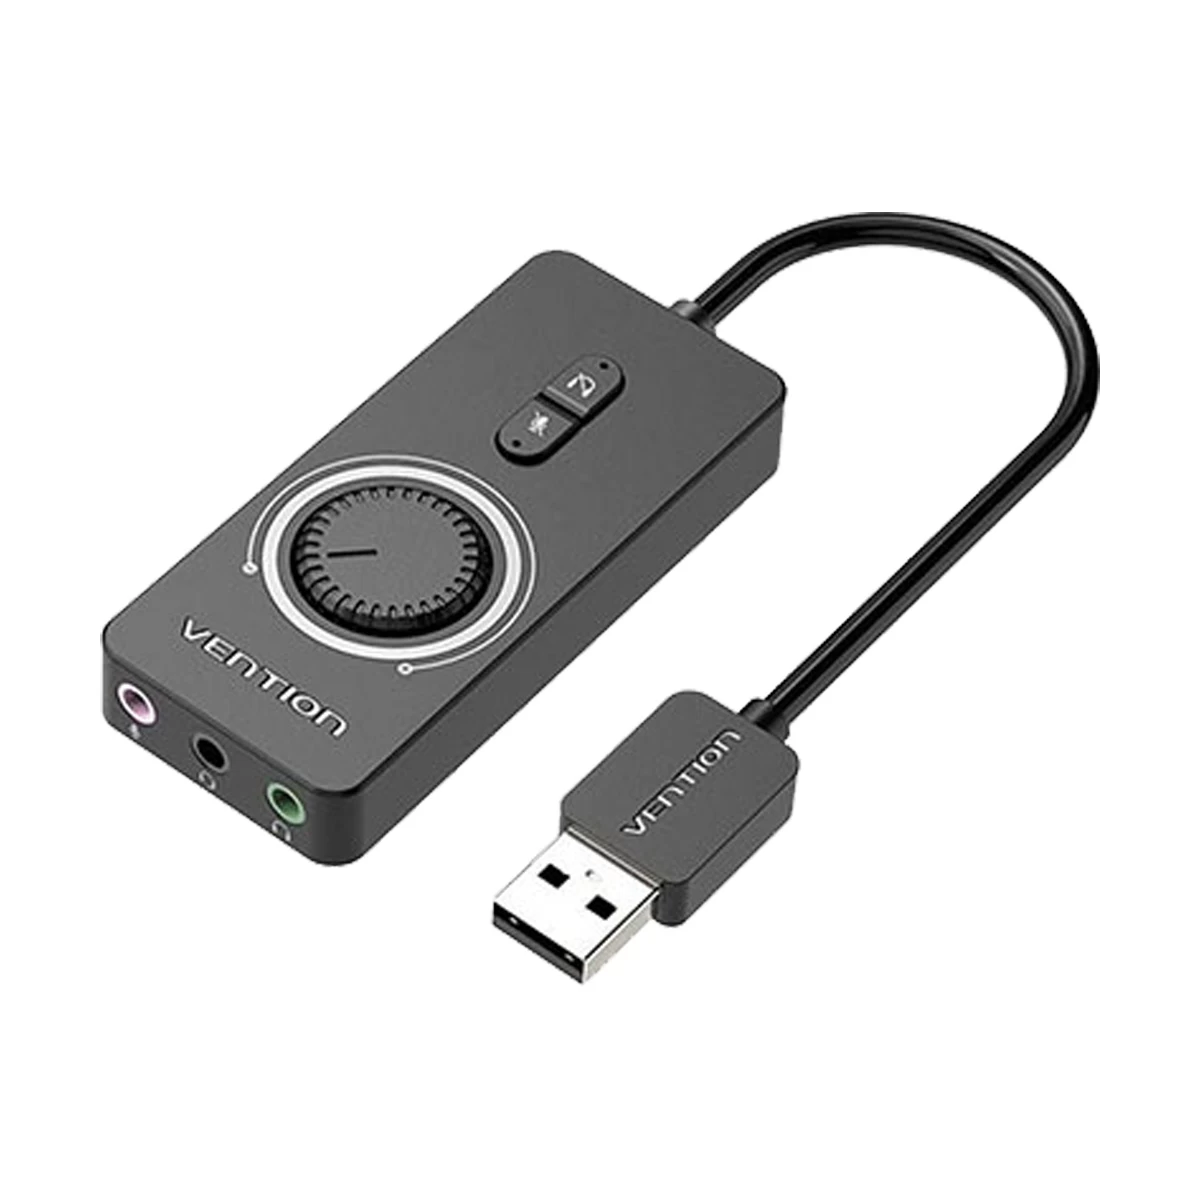 Vention USB 0.5 Meter Black External Sound Card with Volume Control # CDRBD